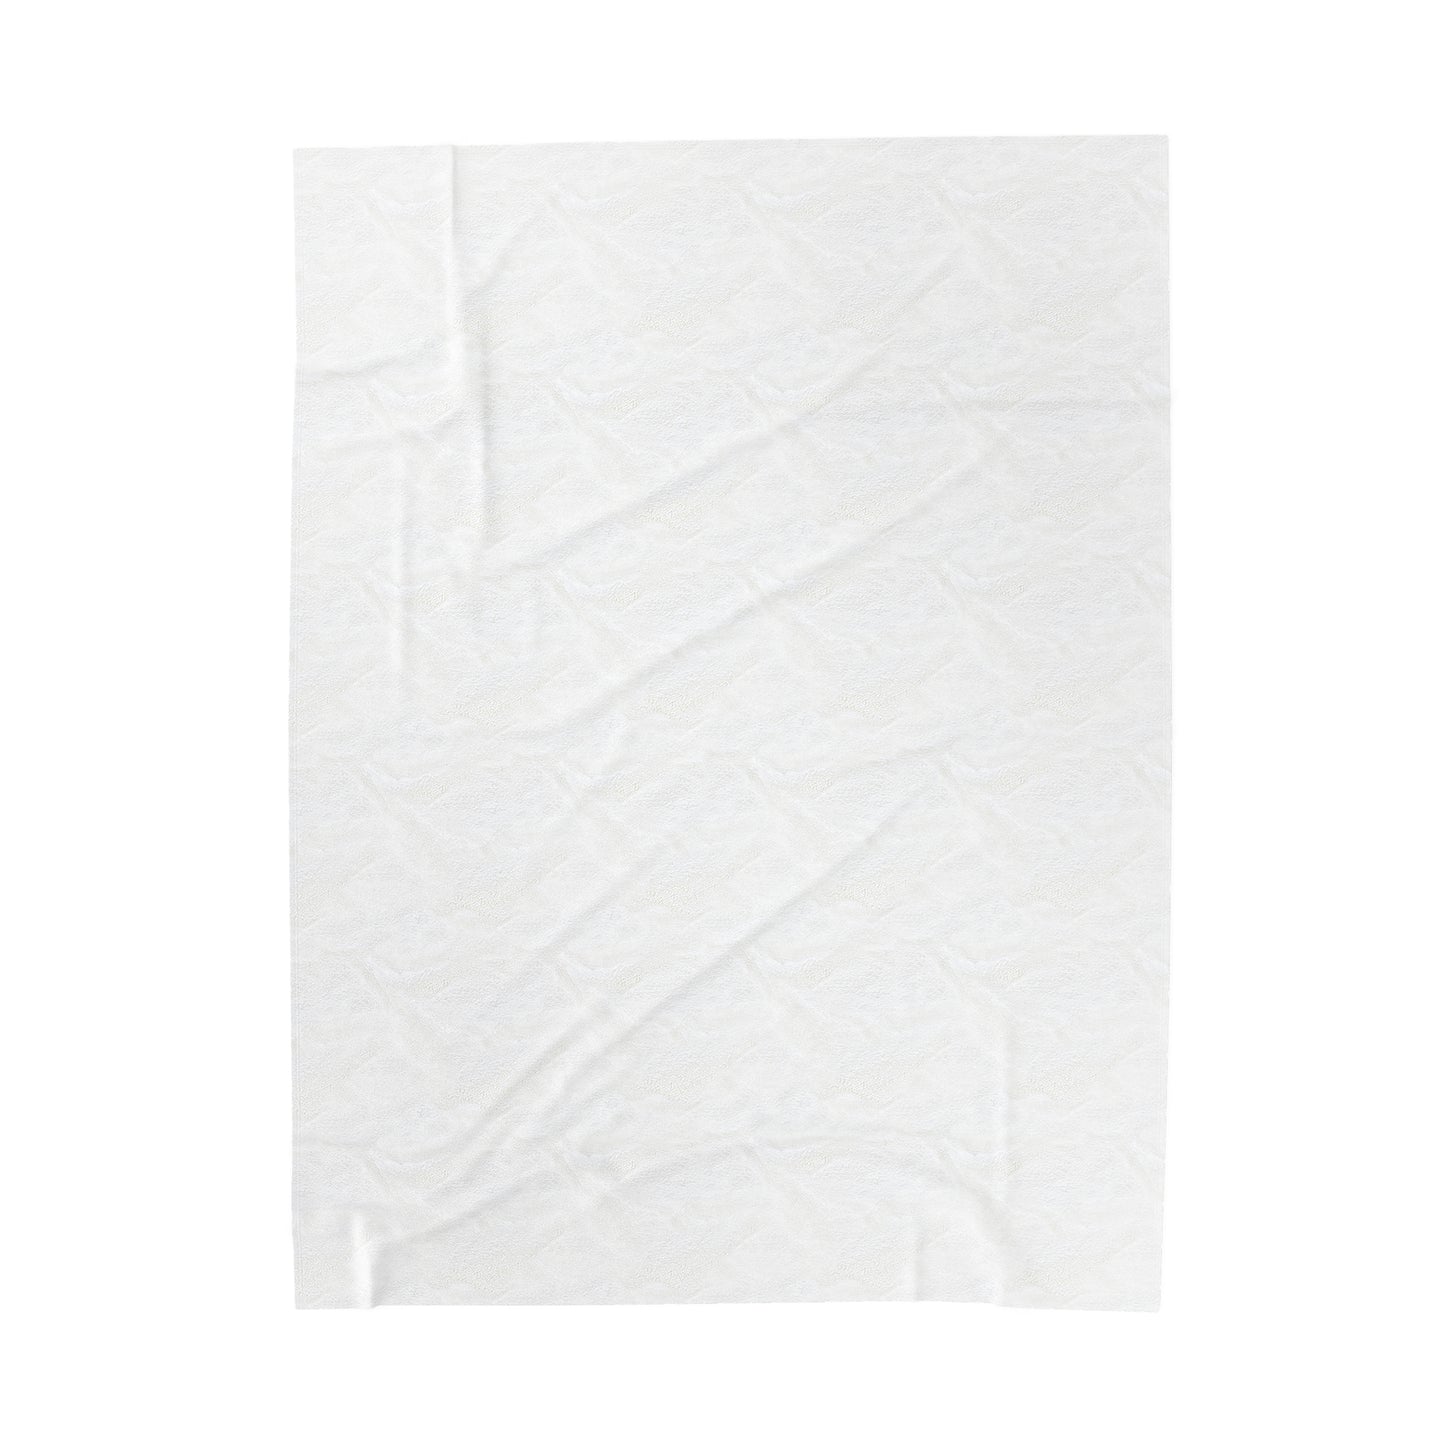 Merry Christmas & Happy New Year Printed Velveteen Plush Blanket, White